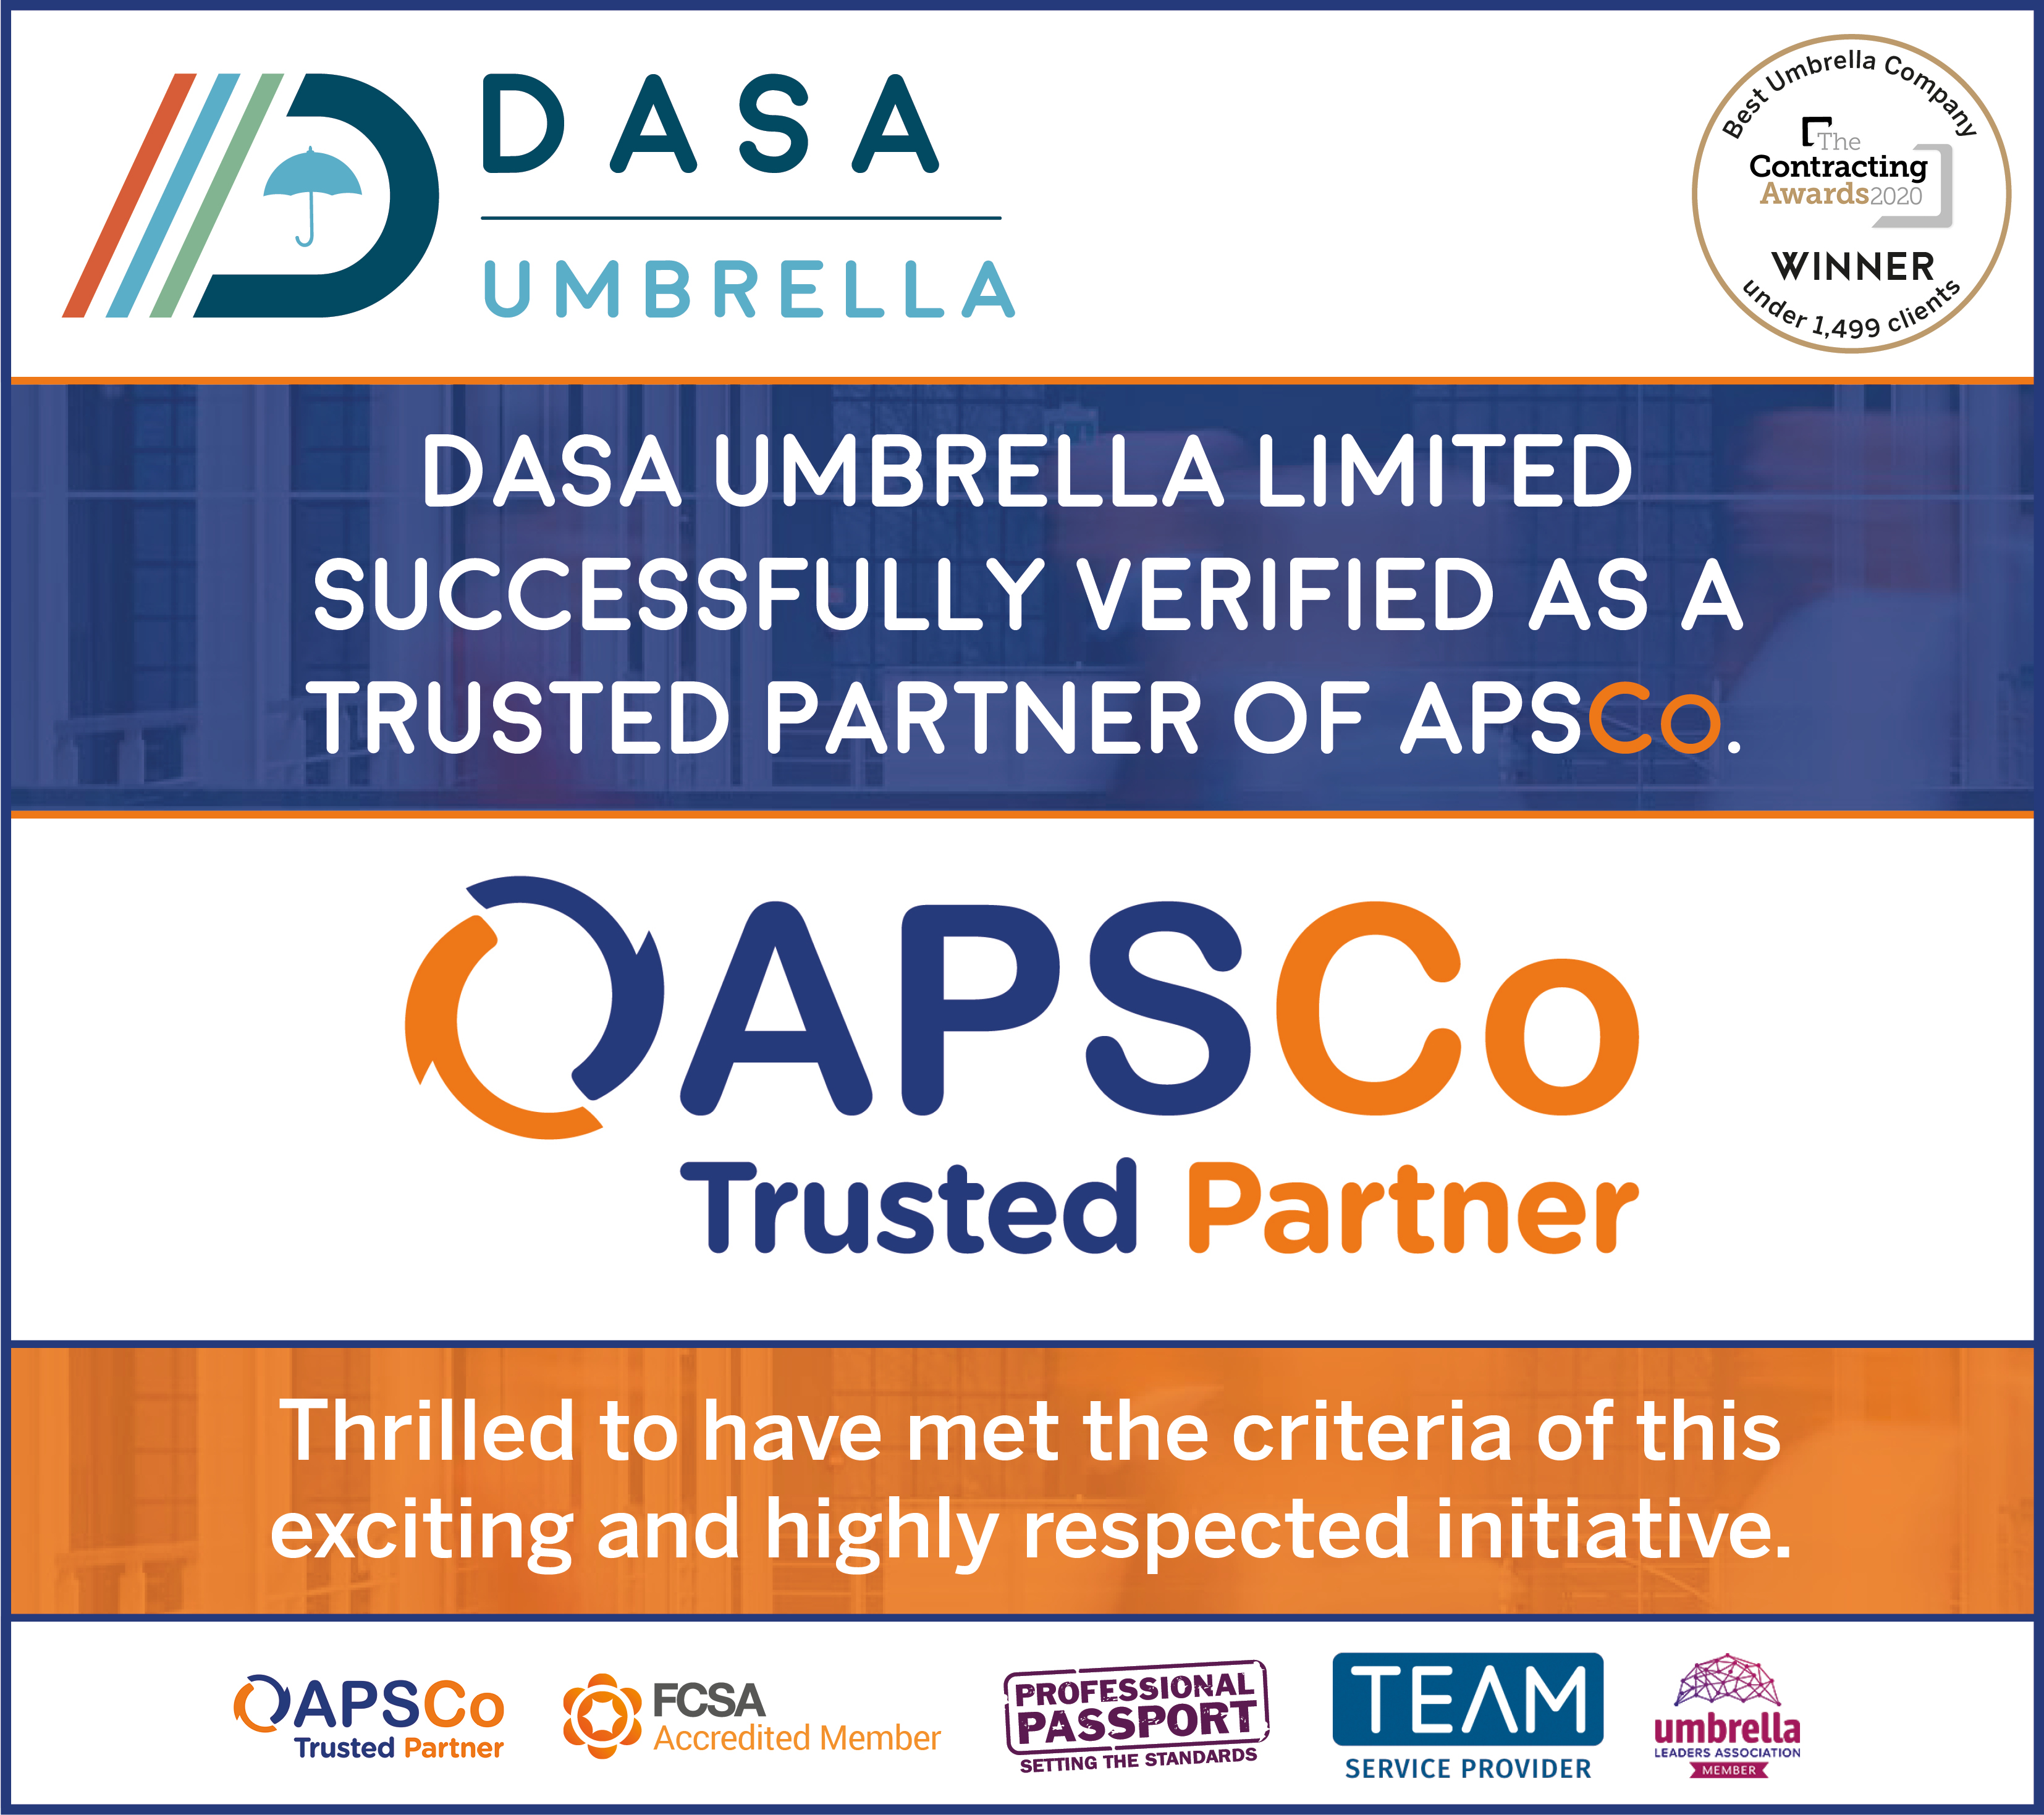 DASA Umbrella Approved as an APSCo Trusted Partner